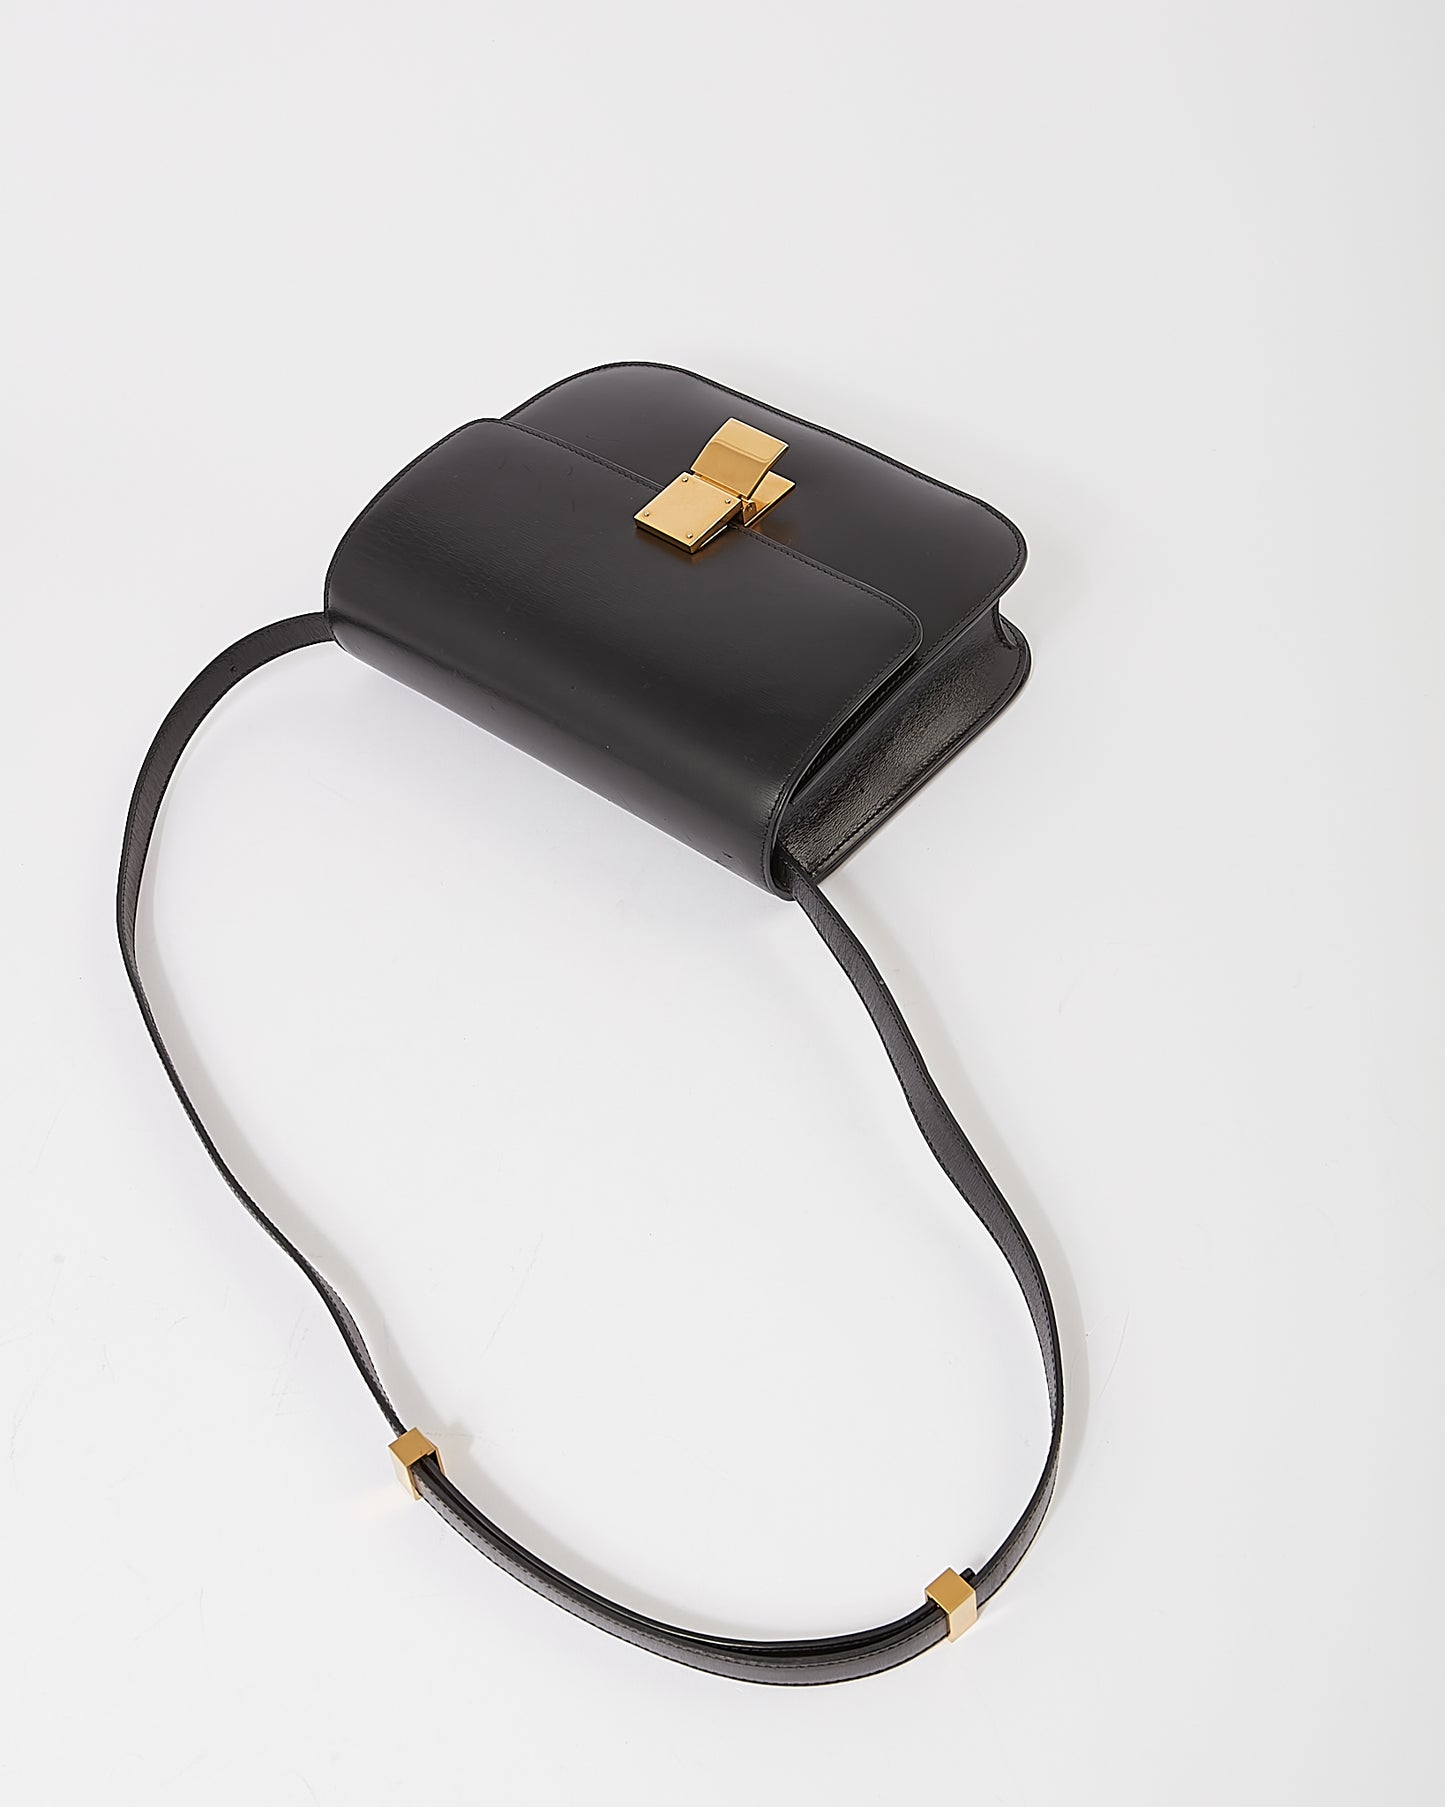 Celine Black Leather Medium Classic Box Bag